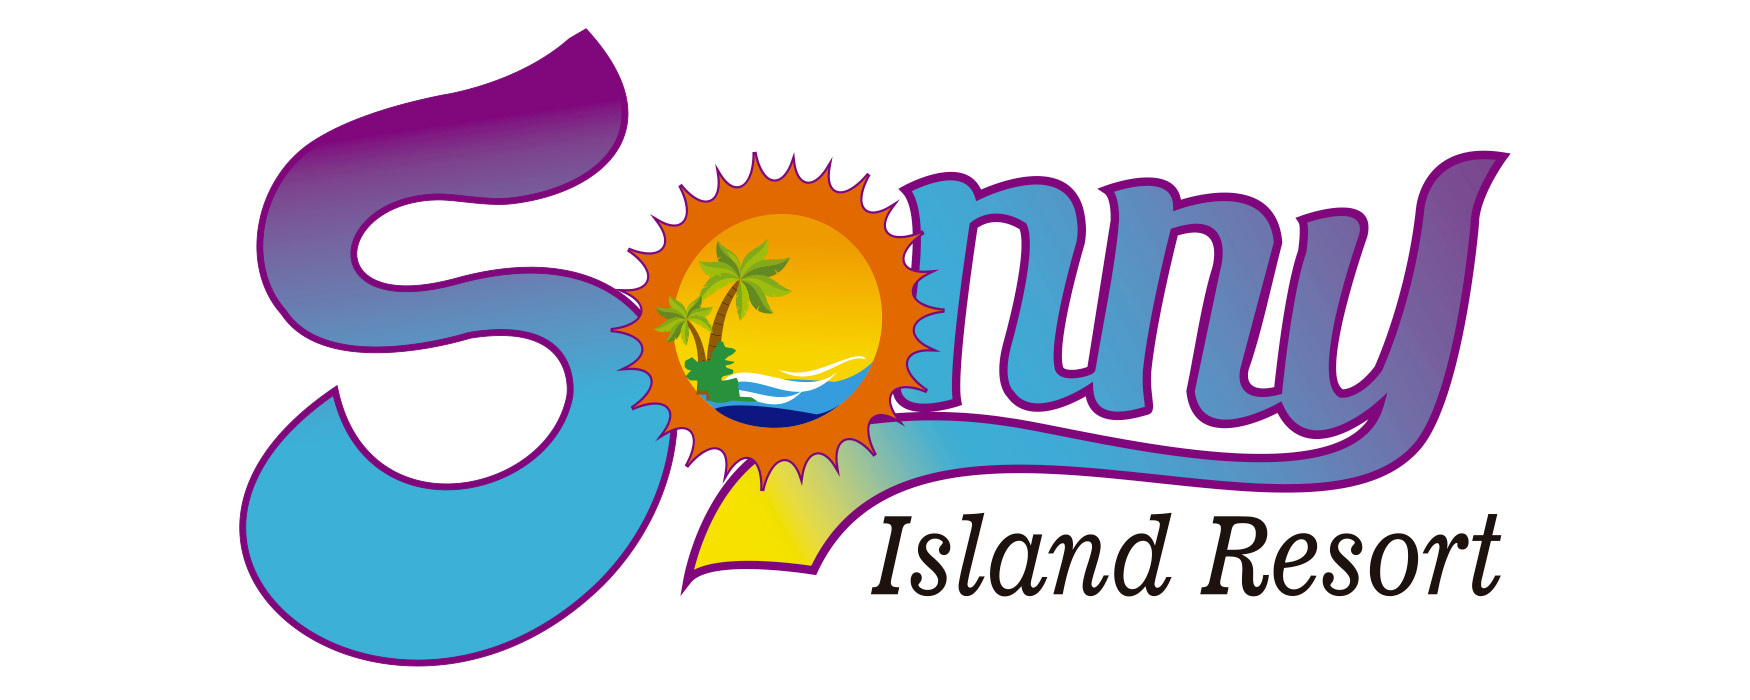 Sonny Island Resort